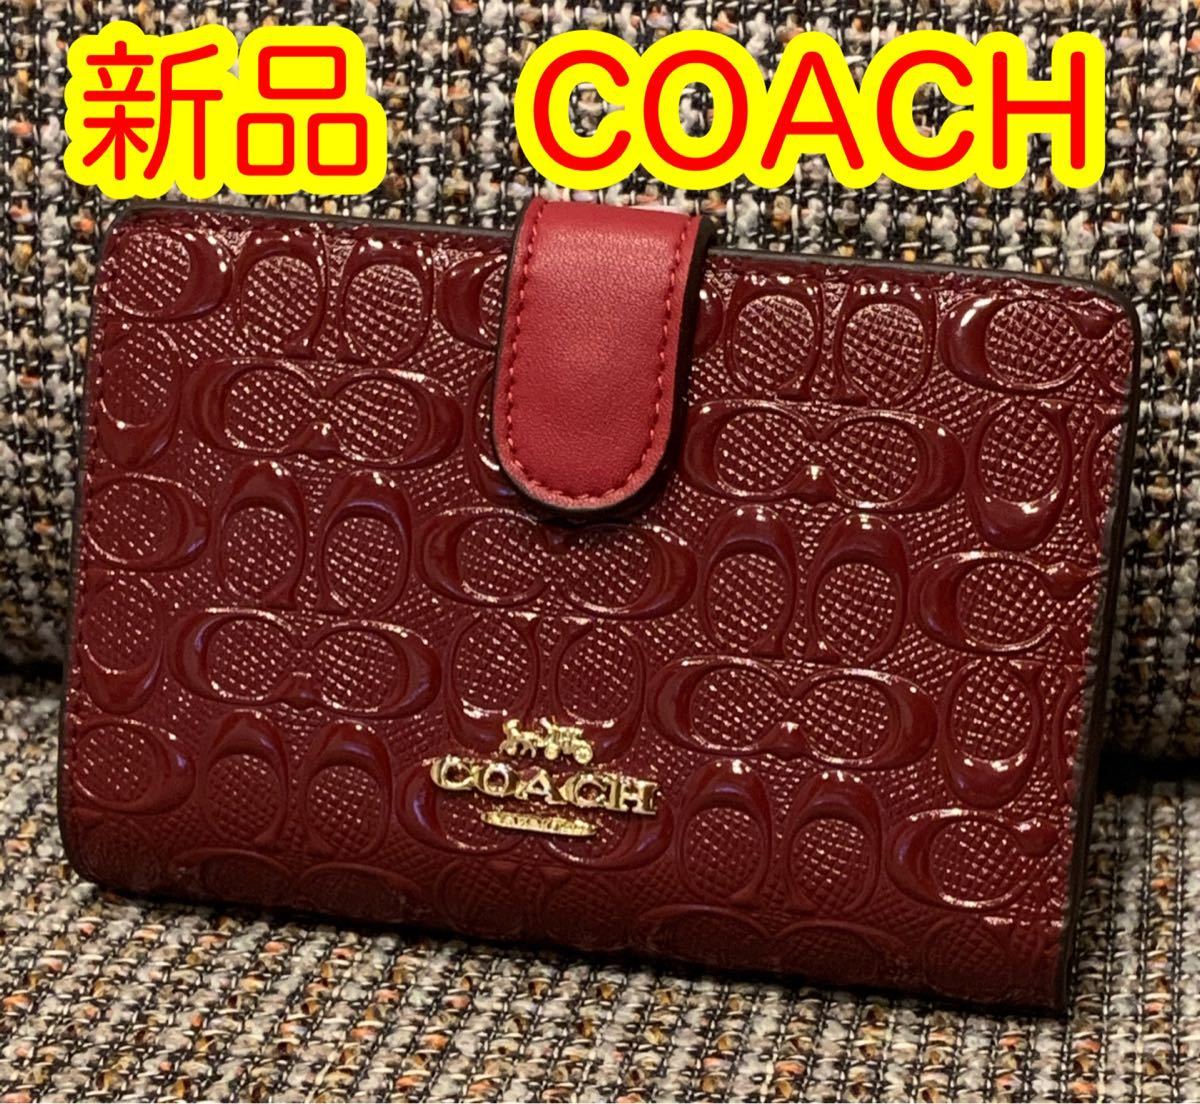 COACH コーチ ✿レッド 赤 二つ折り財布 - rehda.com